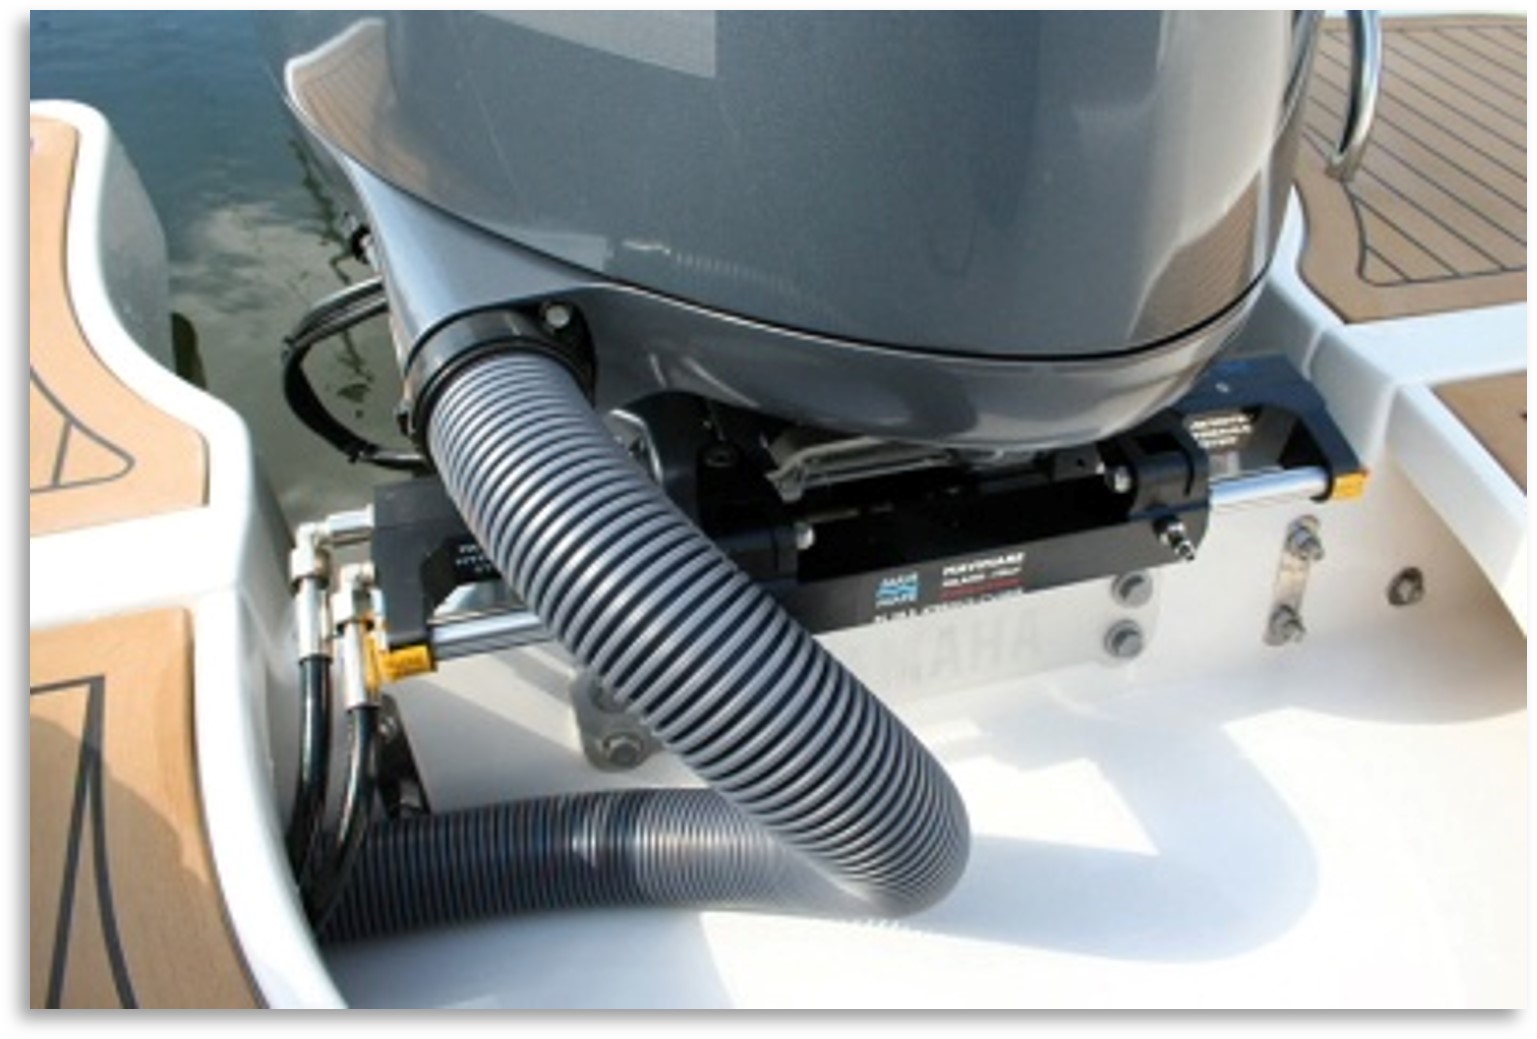 Mavimare Evolution Hydraulic Steering - Click to buy now